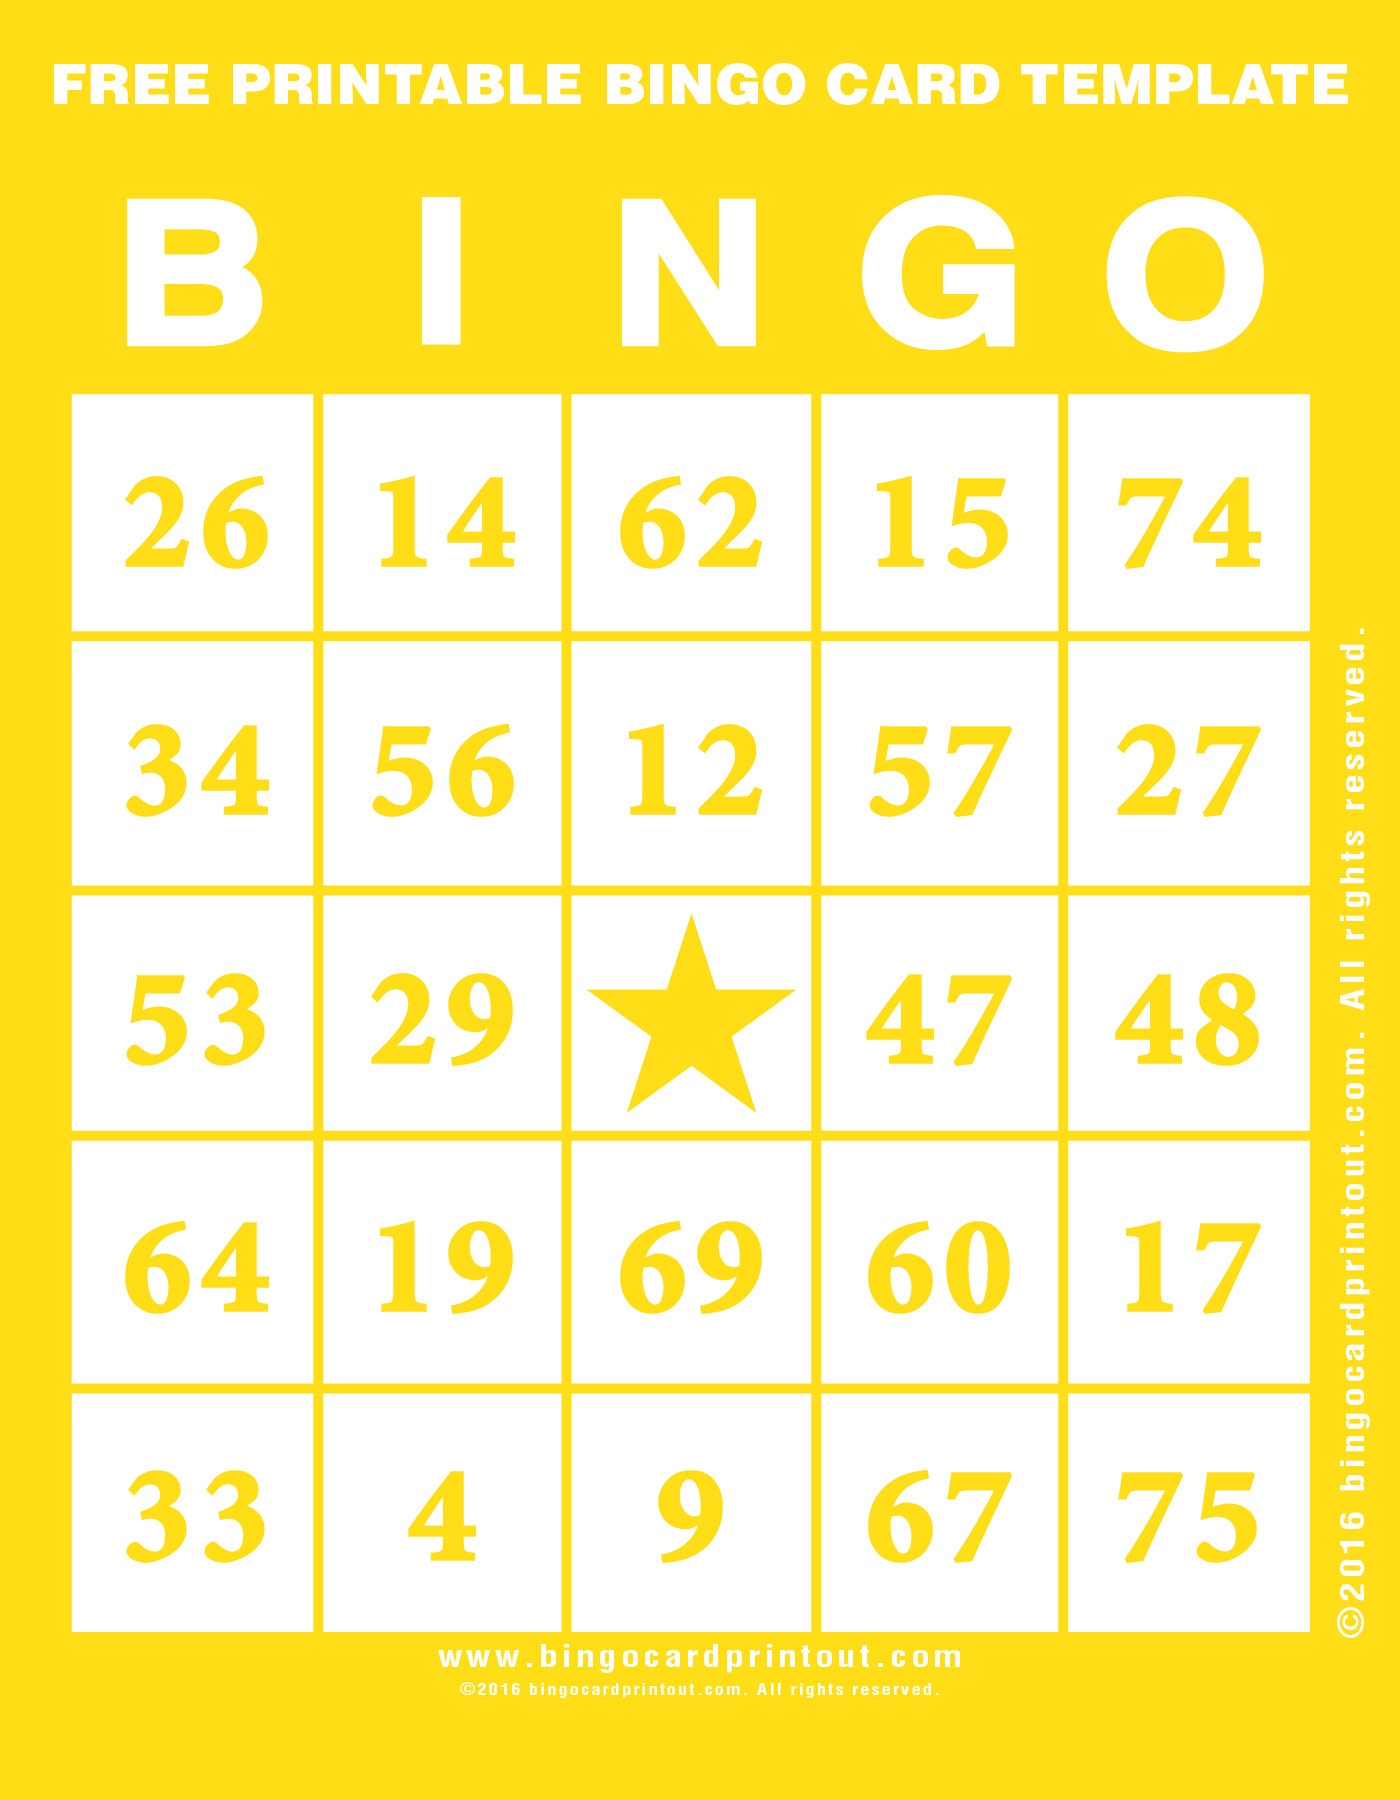 Free Printable Bingo Card Template - Bingocardprintout - Printable Bingo Template Free